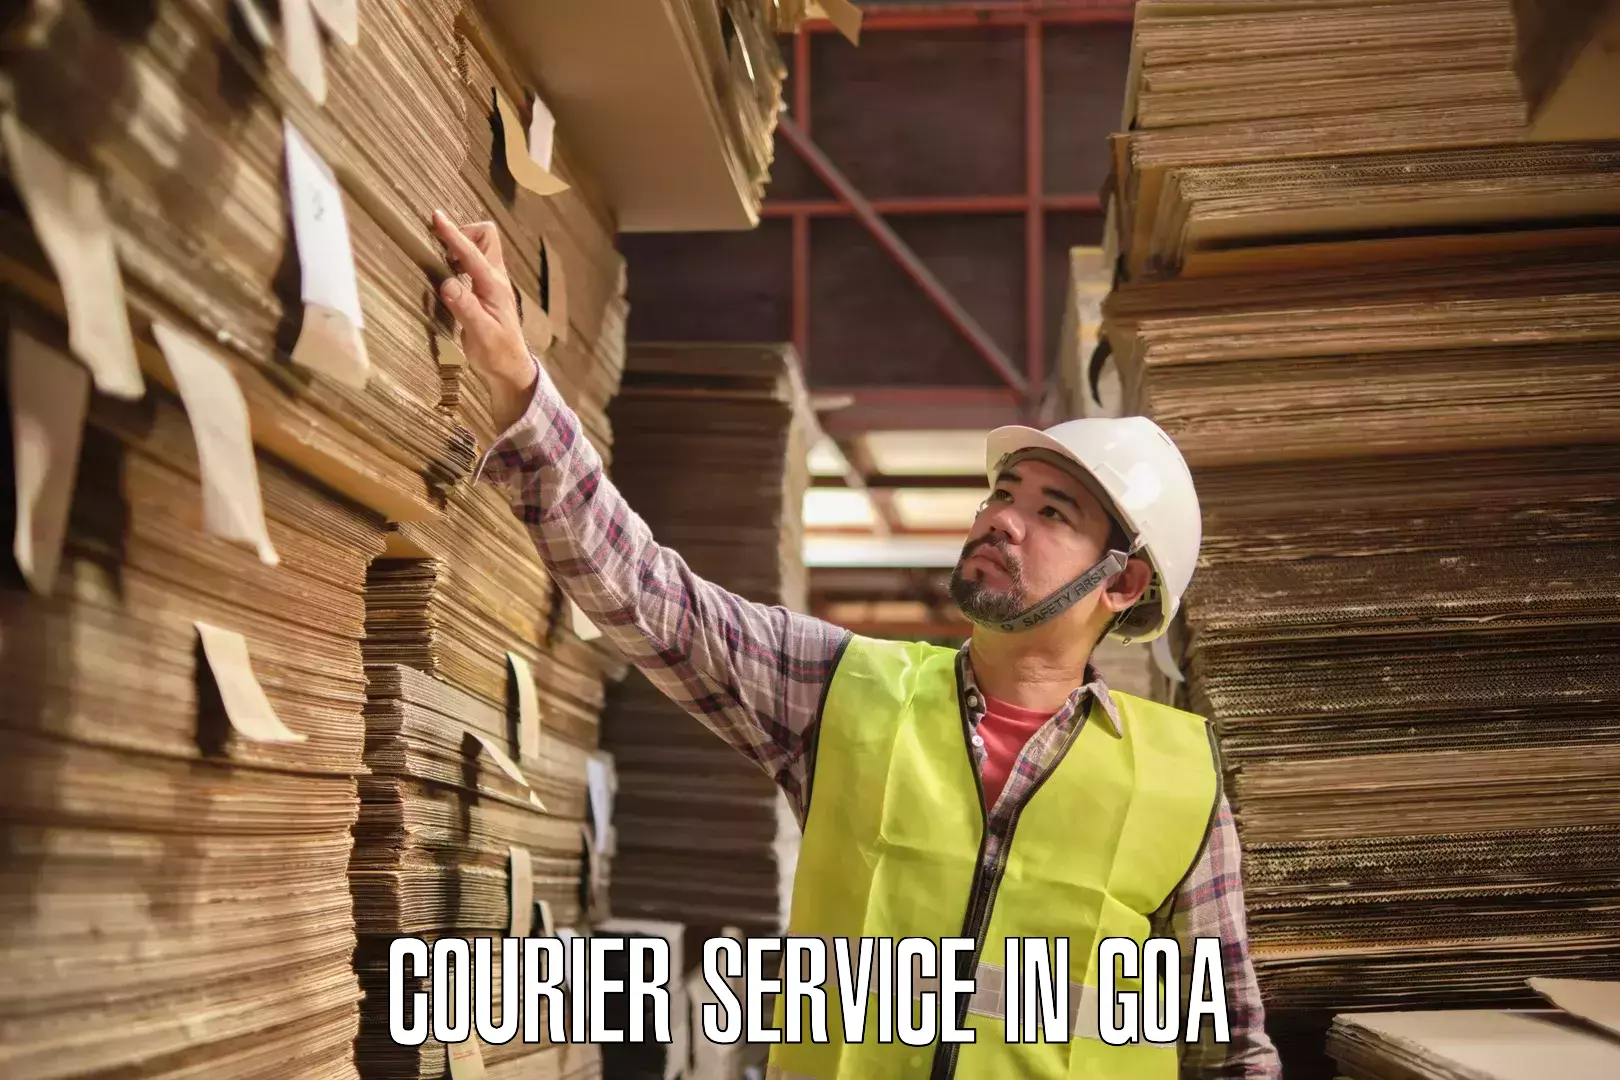 Specialized shipment handling in Goa